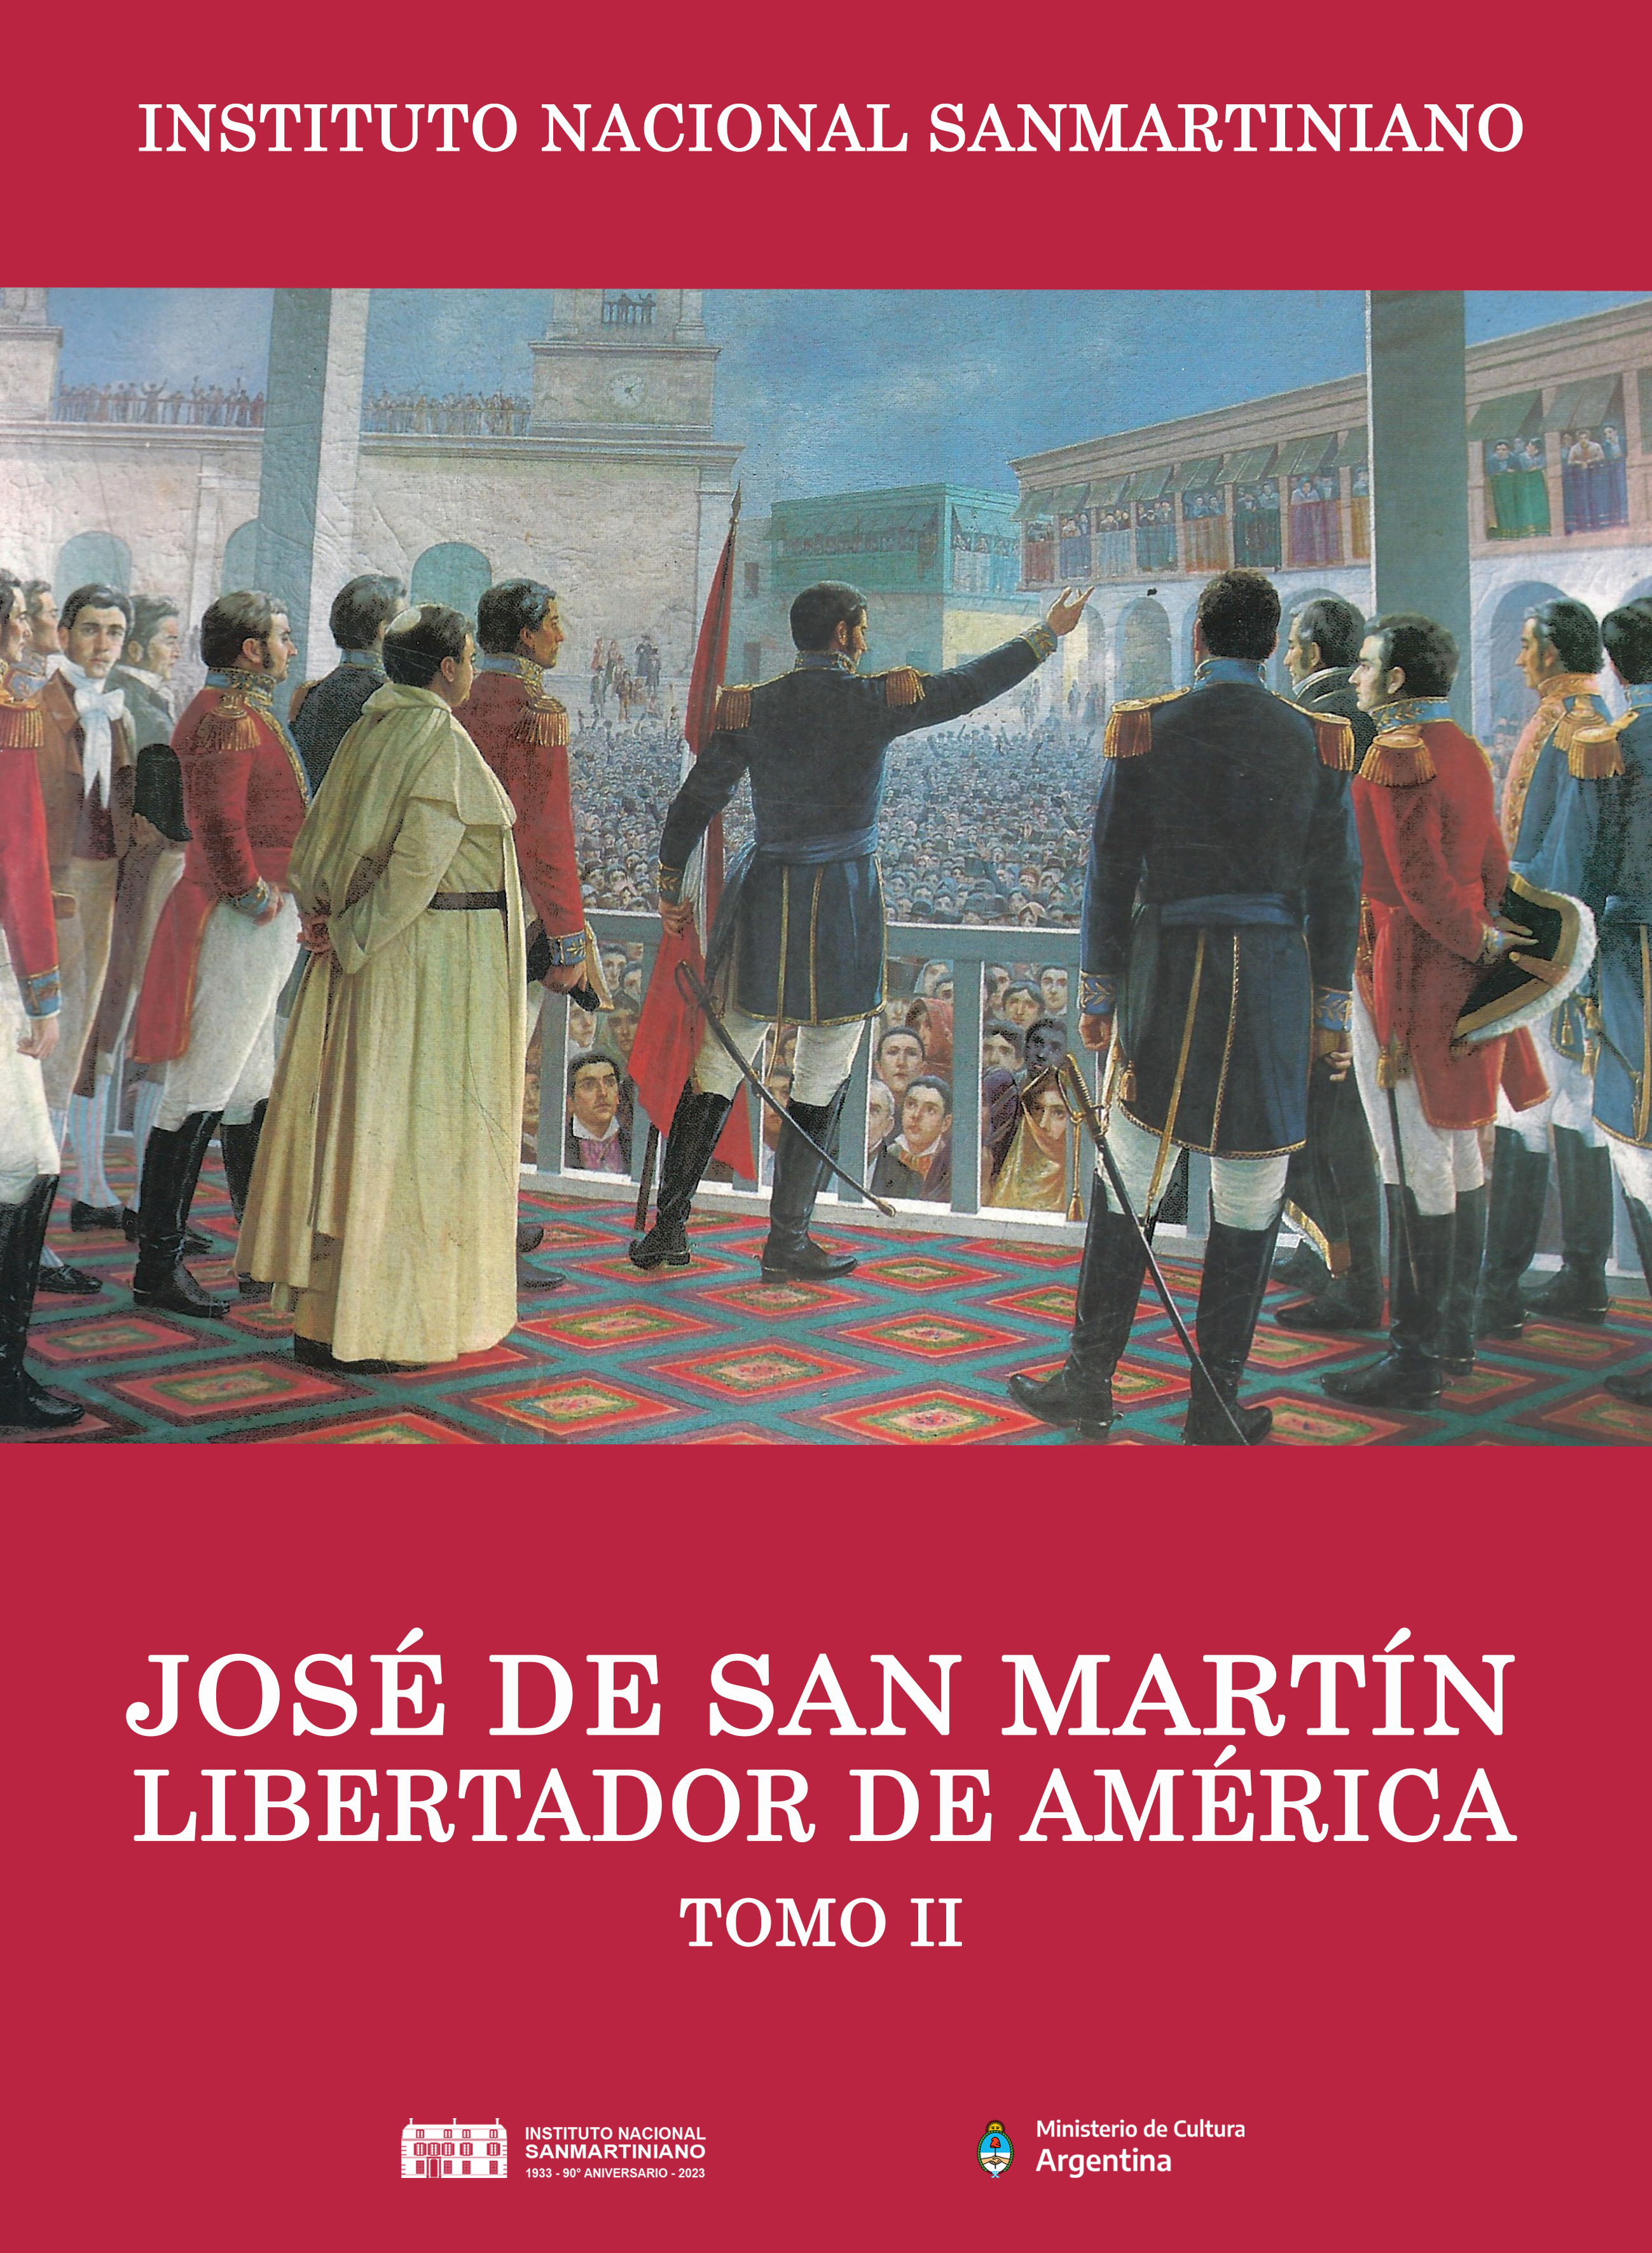 AA.VV. "José de San Martín Libertador de América", Tomo II, Instituto Nacional Sanmartiniano, Buenos Aires, 2023.